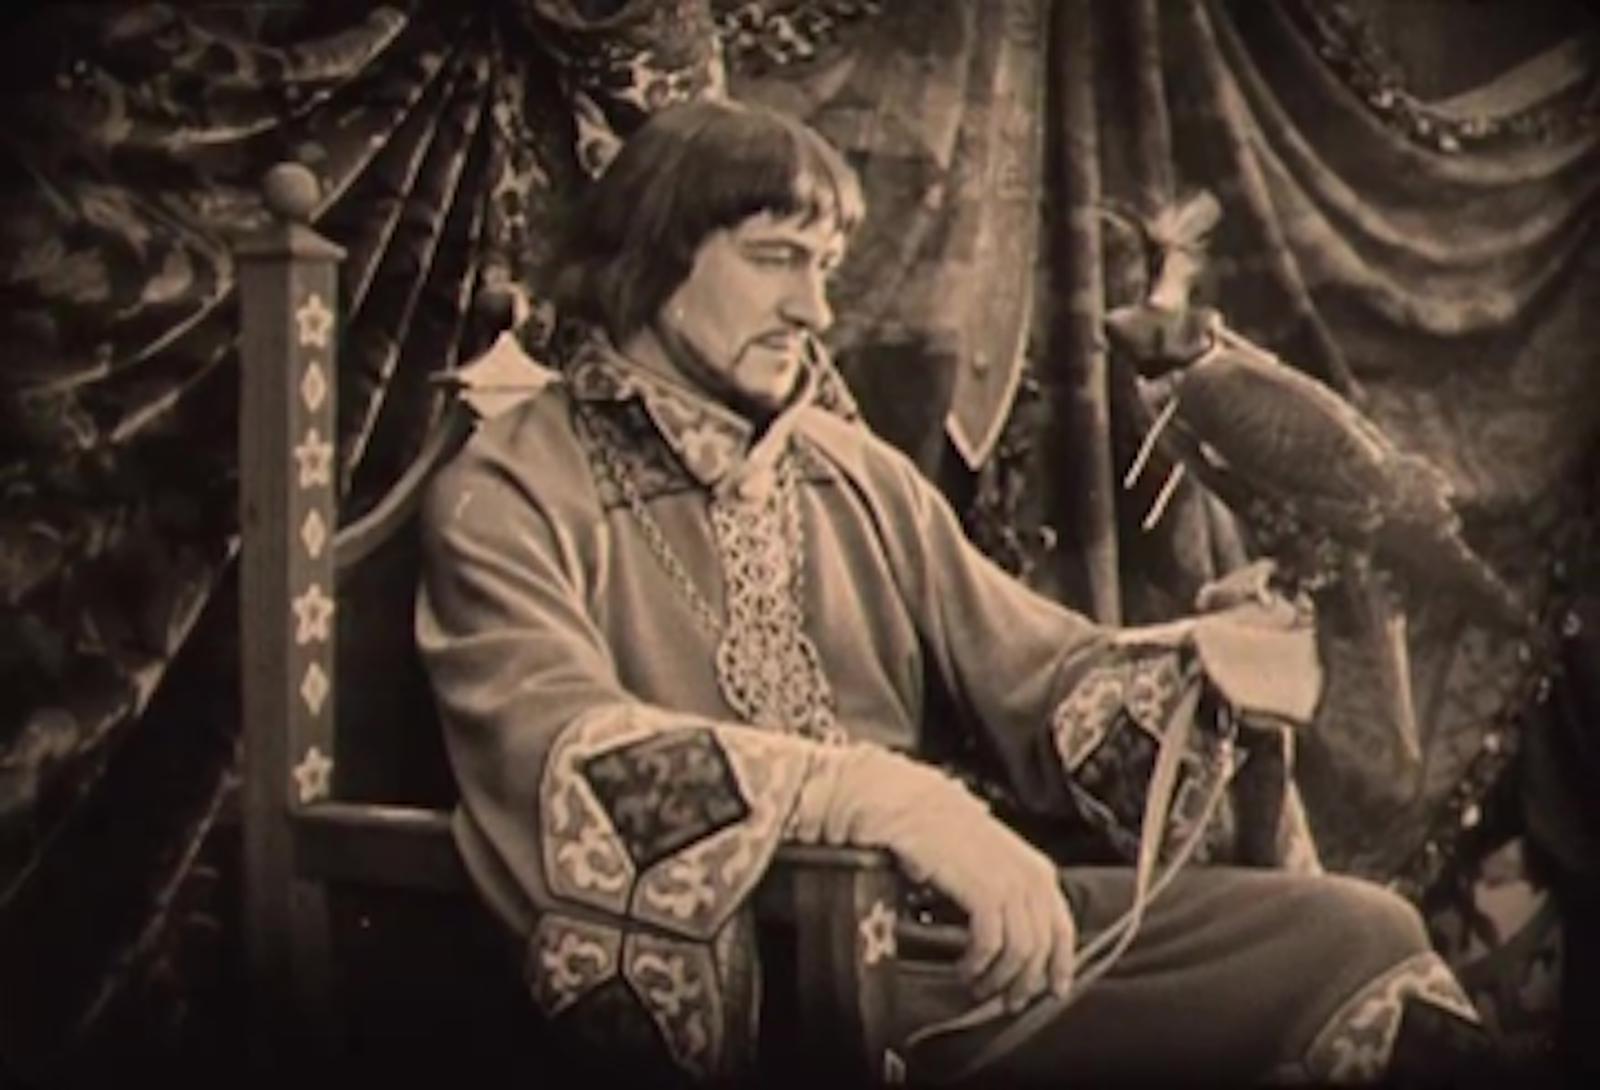 Sam De Grasse plays King John in the 1922 movie "Robin Hood."